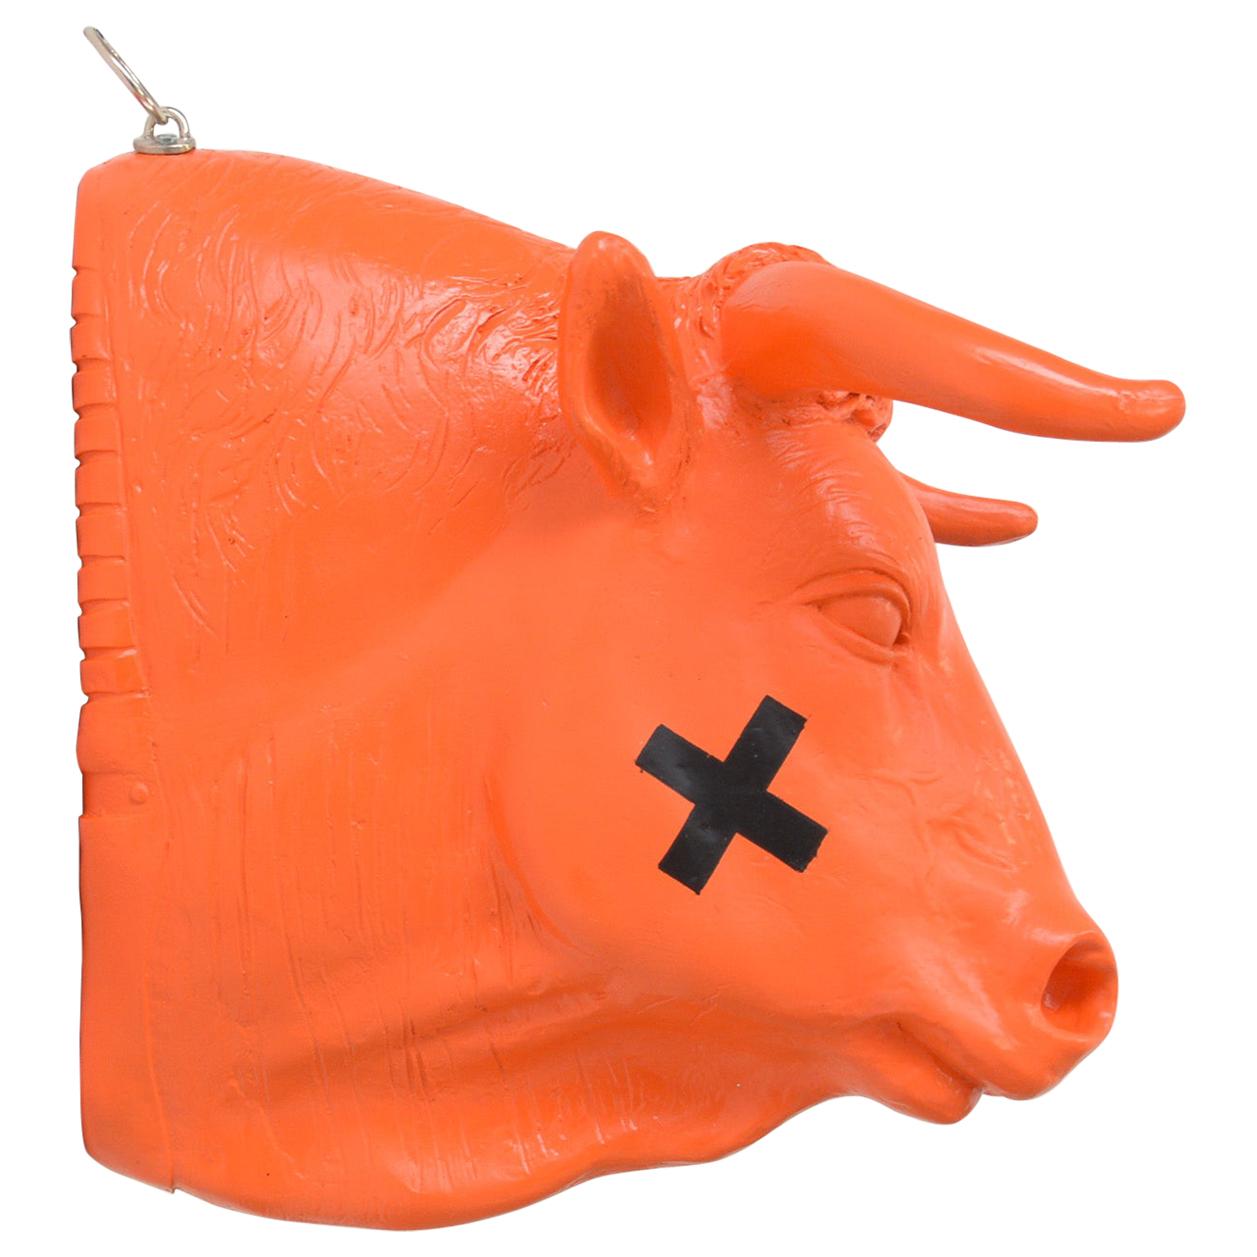 Orange Bullsit by Hans Weyers, 2019